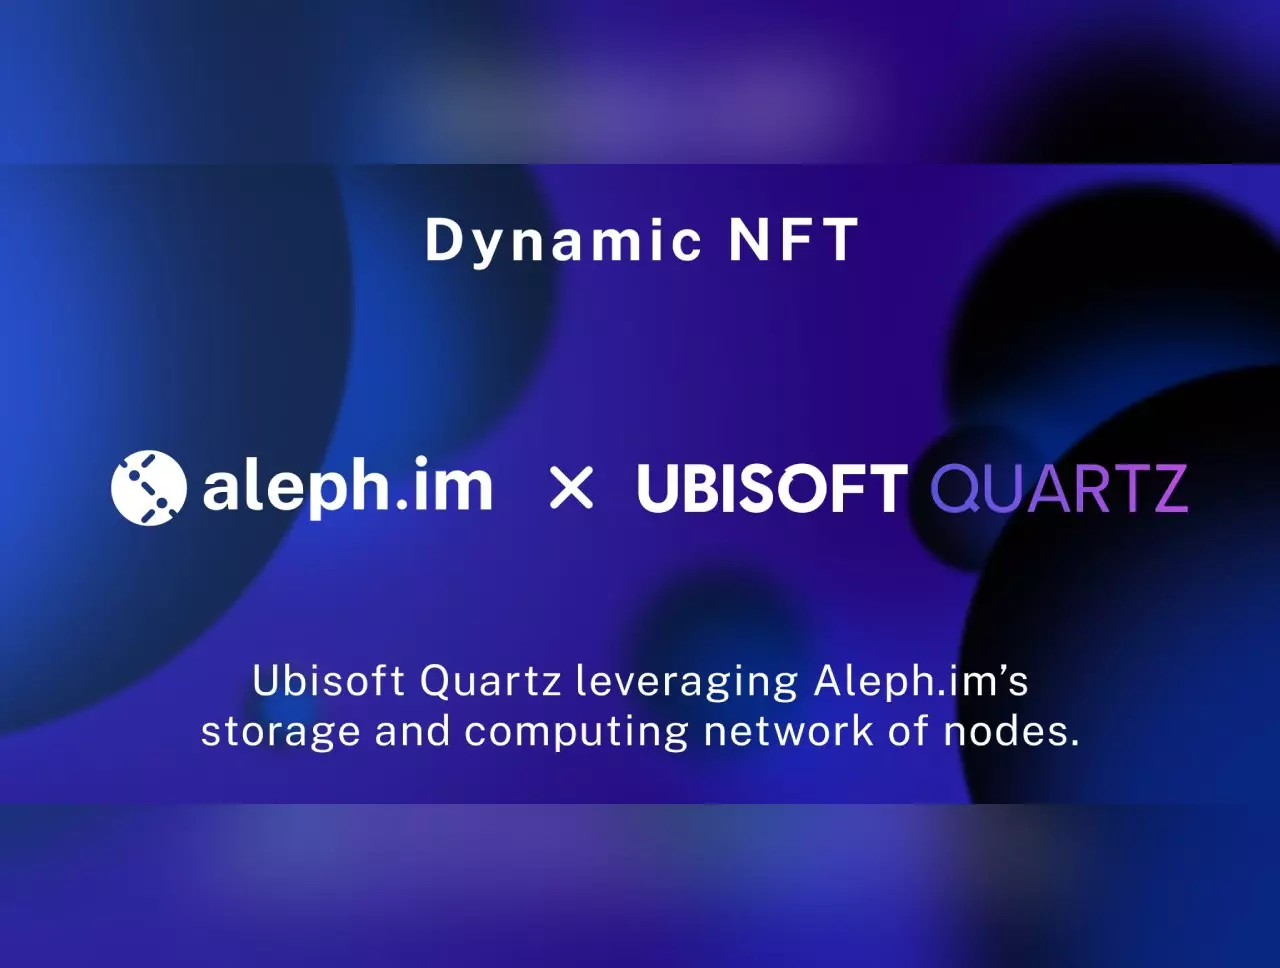 Ubisoft Partners With Aleph.im For Blockchain Storage